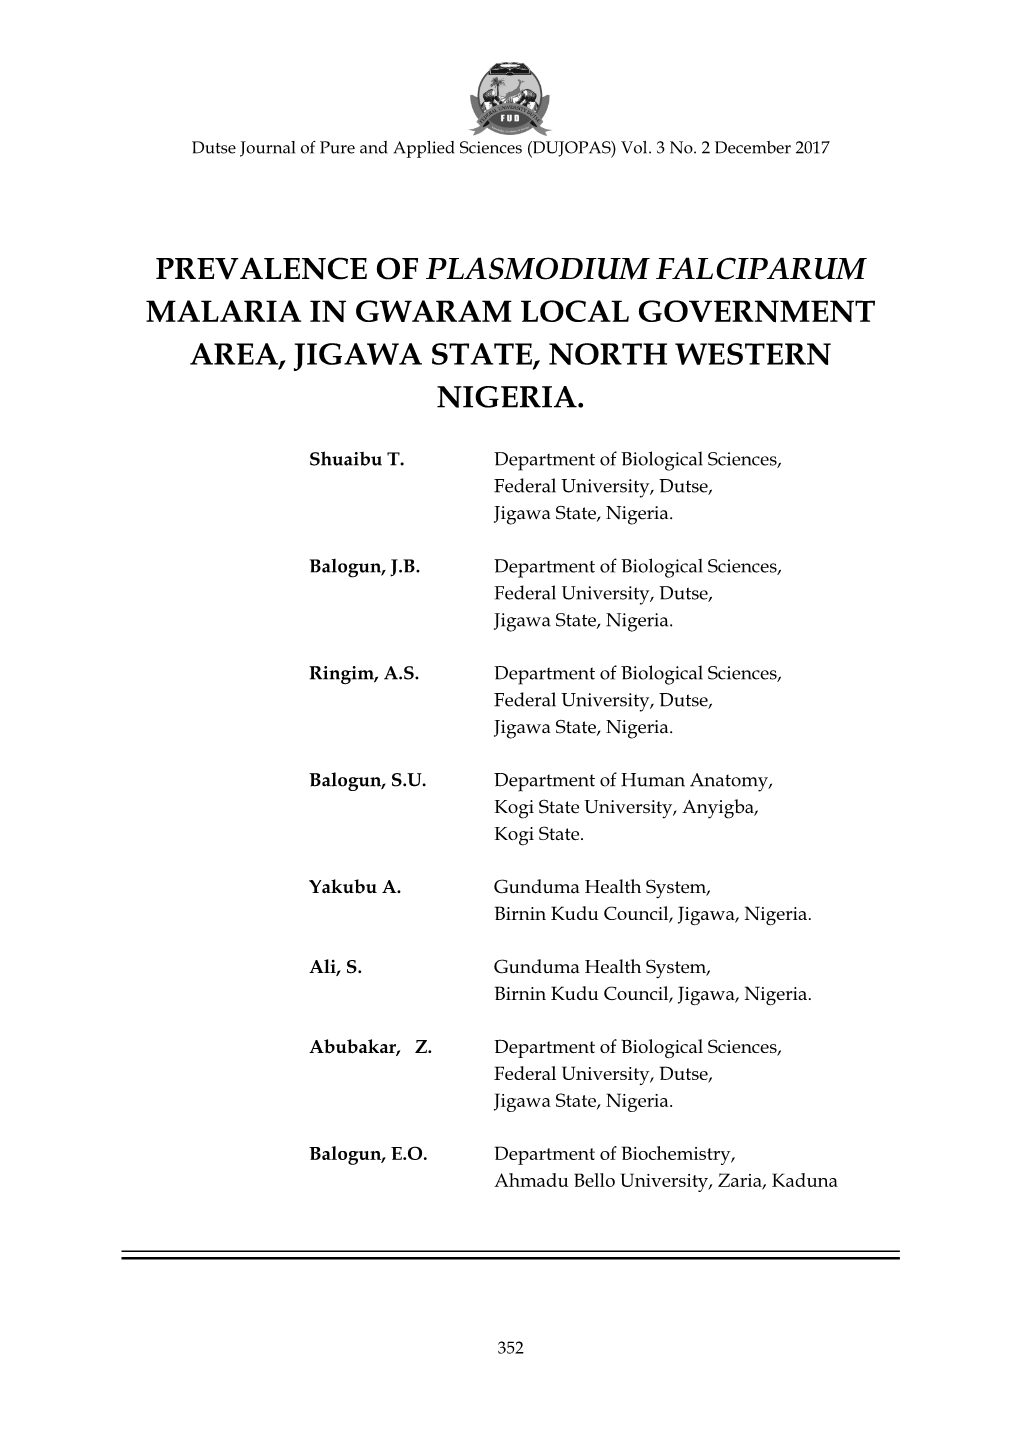 Prevalence of Plasmodium Falciparum Malaria in Gwaram Local Government Area, Jigawa State, North Western Nigeria